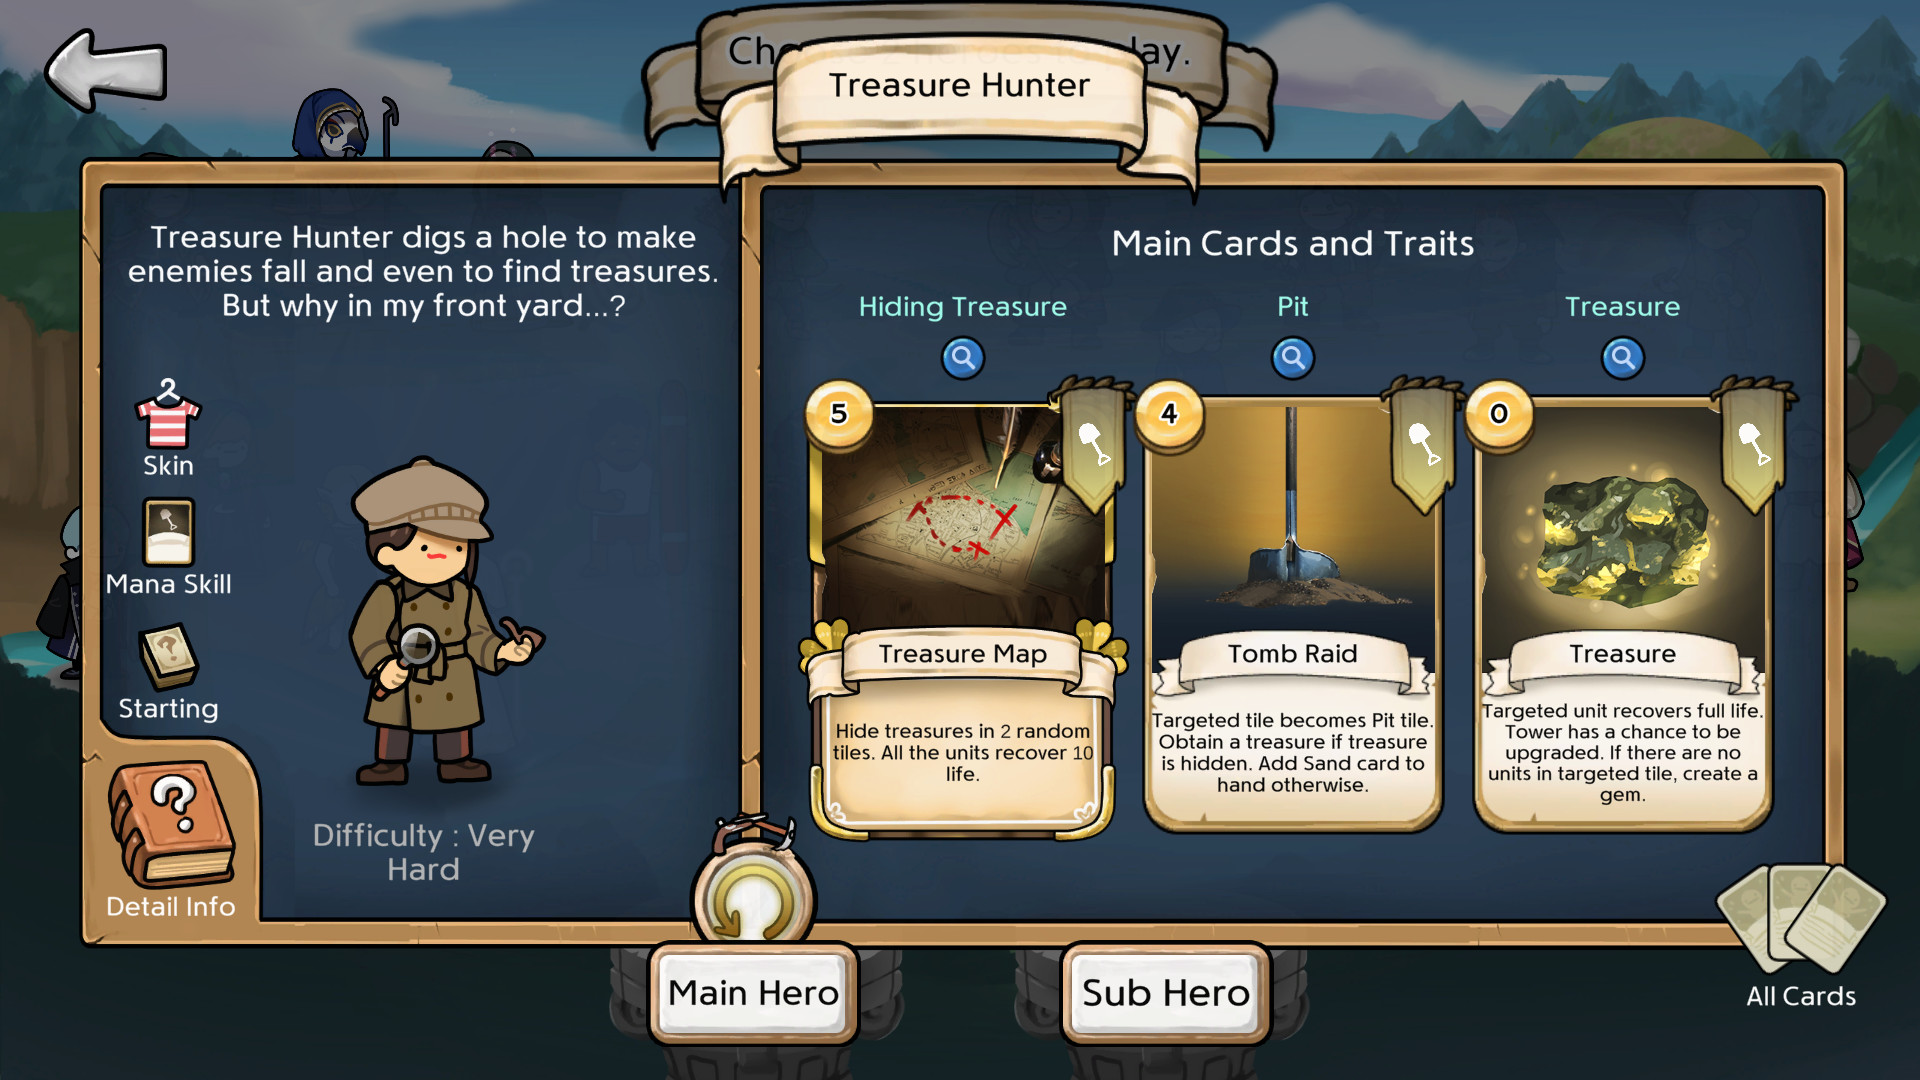 3 Minute Heroes - Detective (Treasure Hunter Skin) Featured Screenshot #1